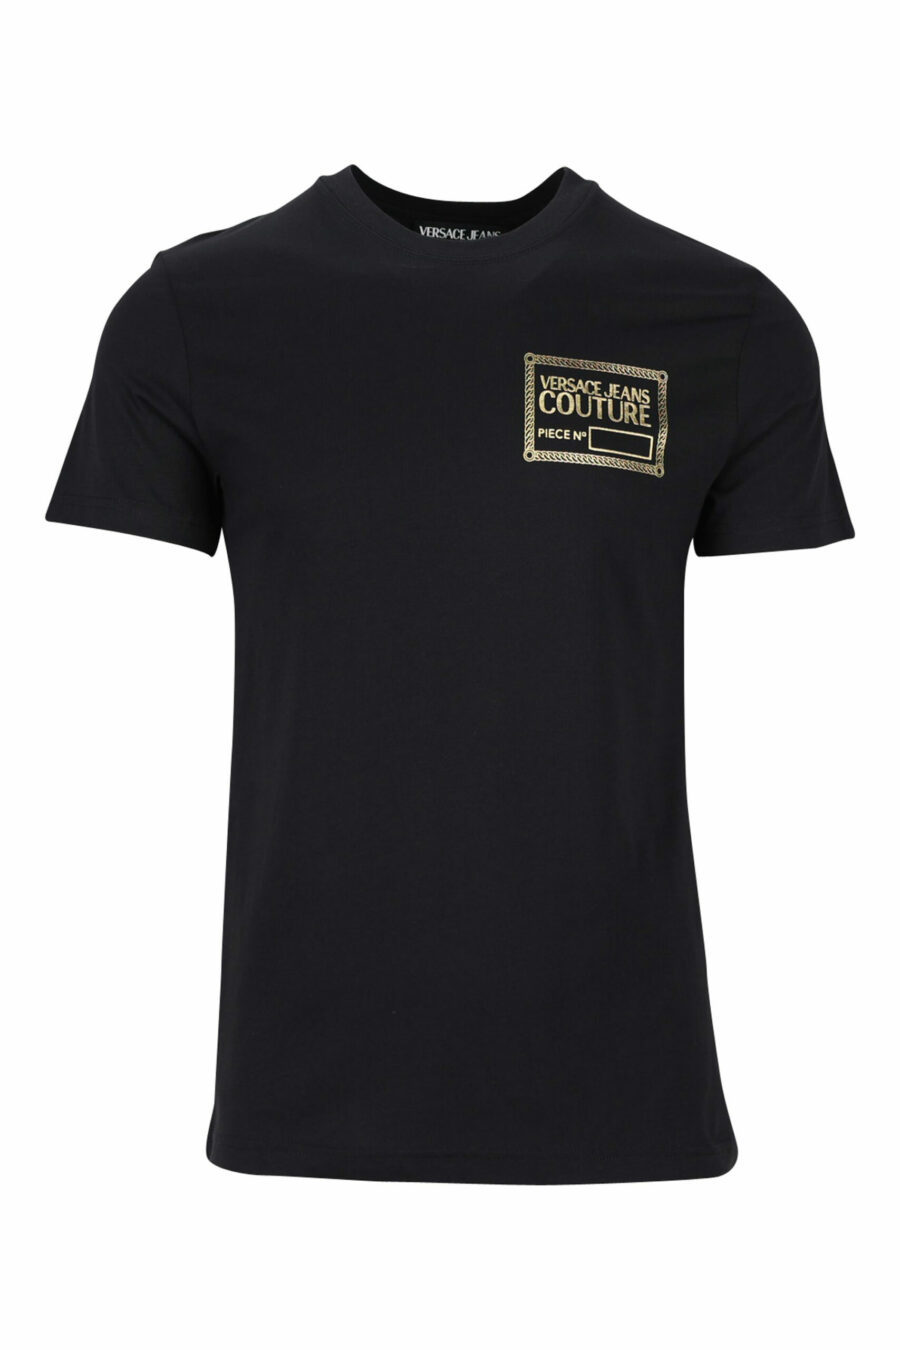 Schwarzes T-Shirt mit goldenem "Stückzahl"-Minilogo - 8052019456875 skaliert